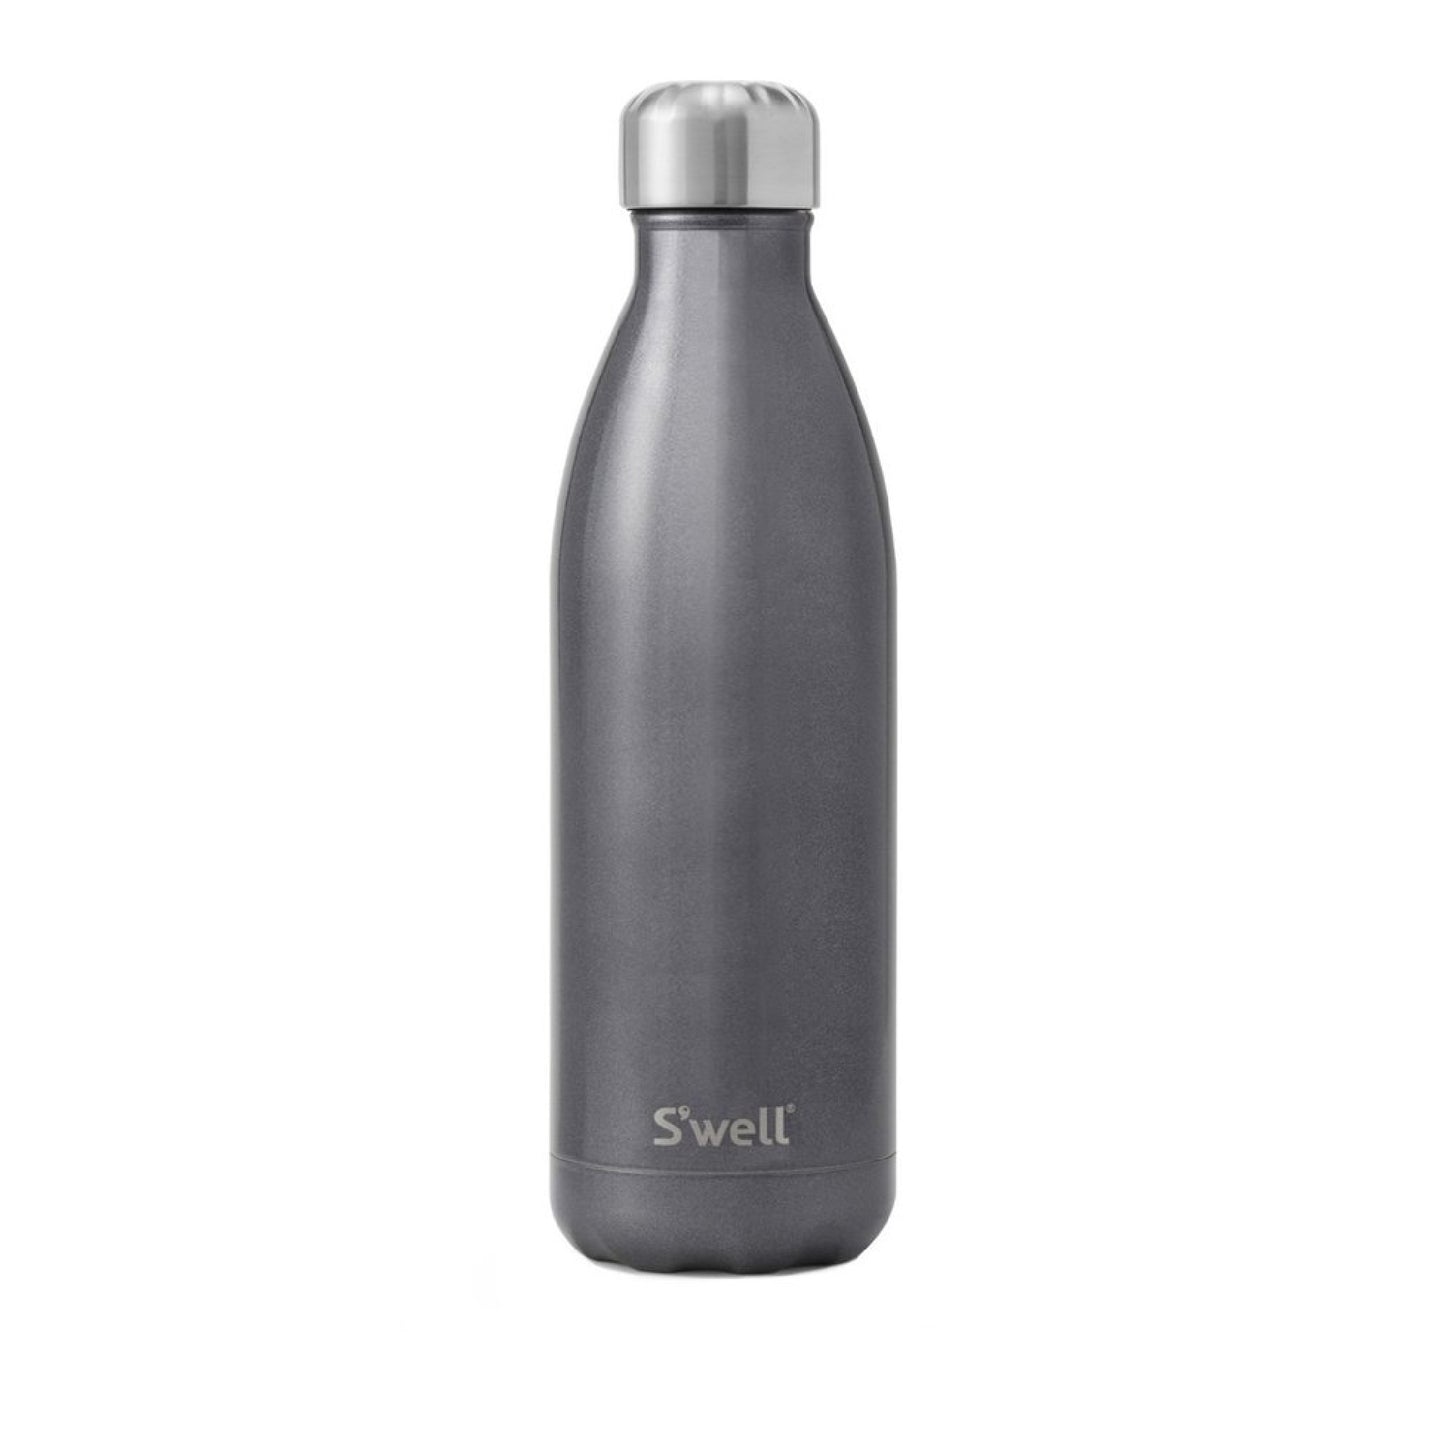 S’well Bottle